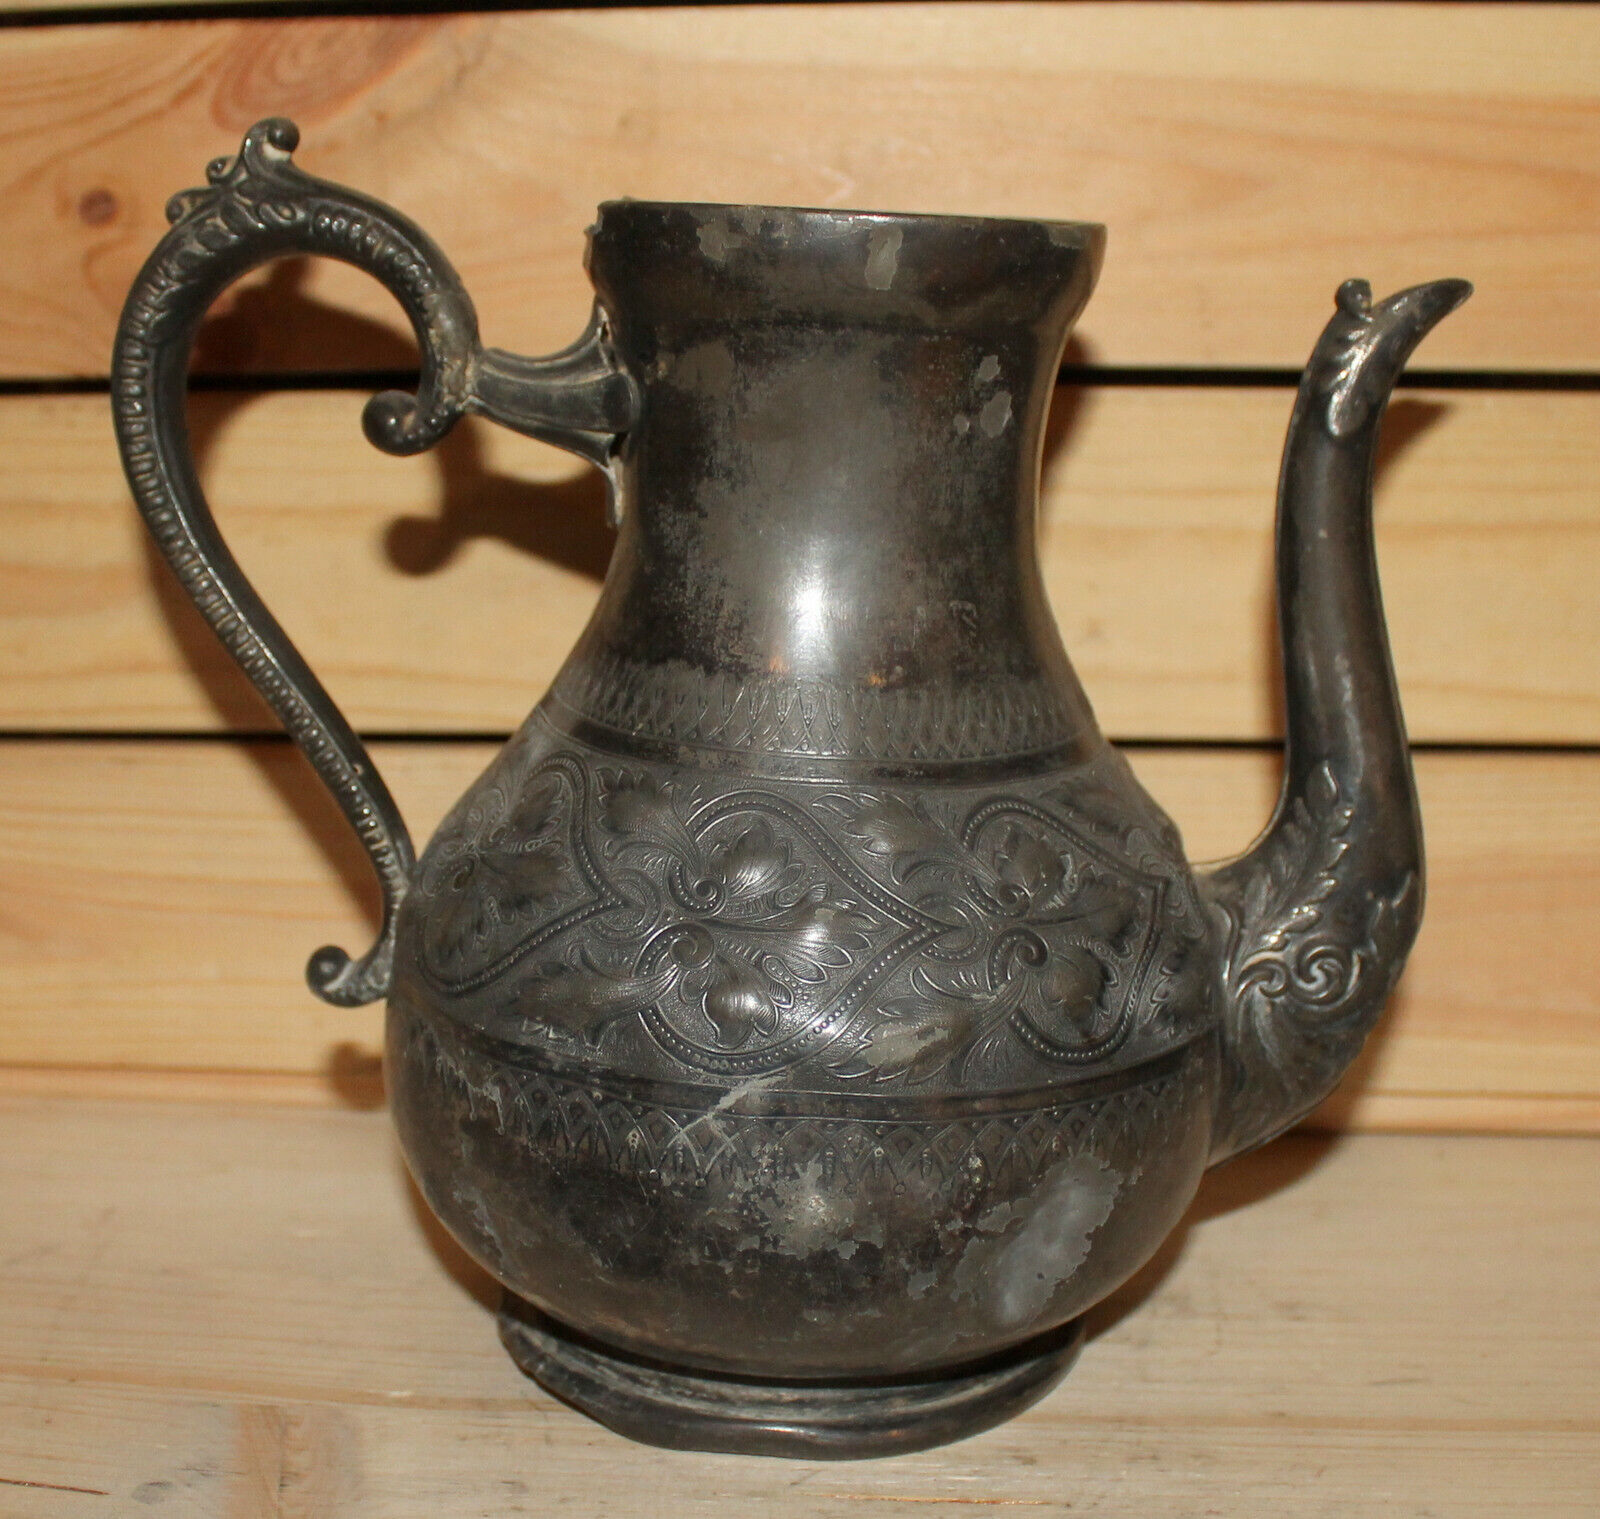 Antique 19c British hand made ornate floral pewter teapot jug